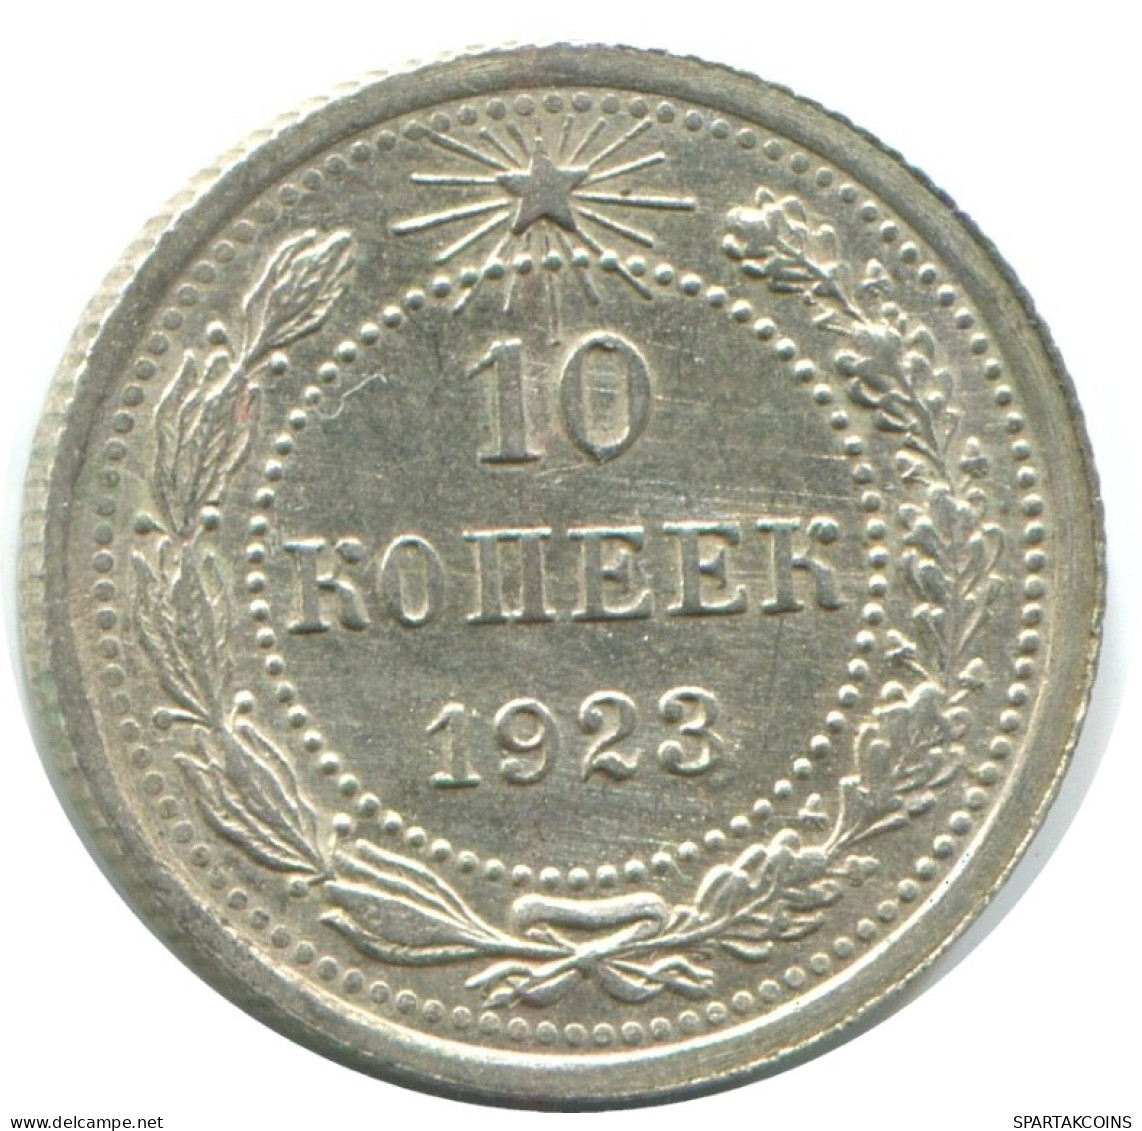 10 KOPEKS 1923 RUSIA RUSSIA RSFSR PLATA Moneda HIGH GRADE #AE929.4.E.A - Russia